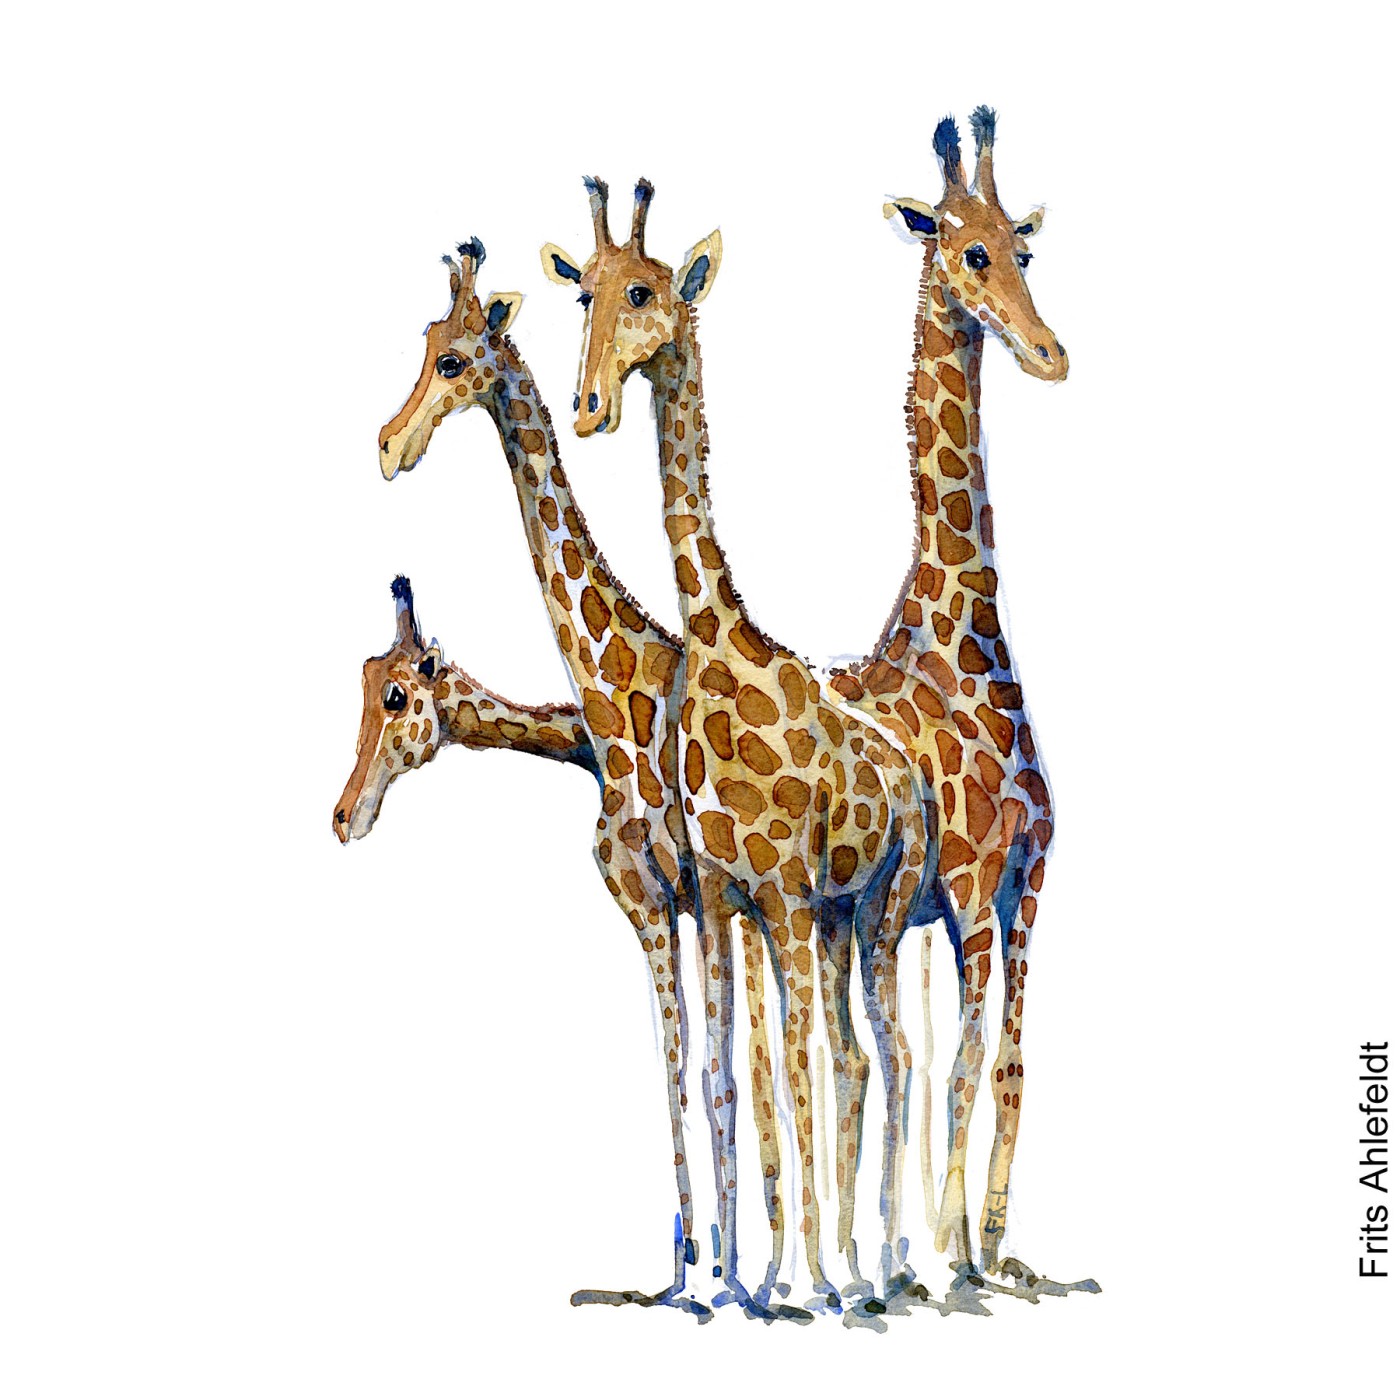 Watercolor of giraffe. Illustration by Frits Ahlefeldt